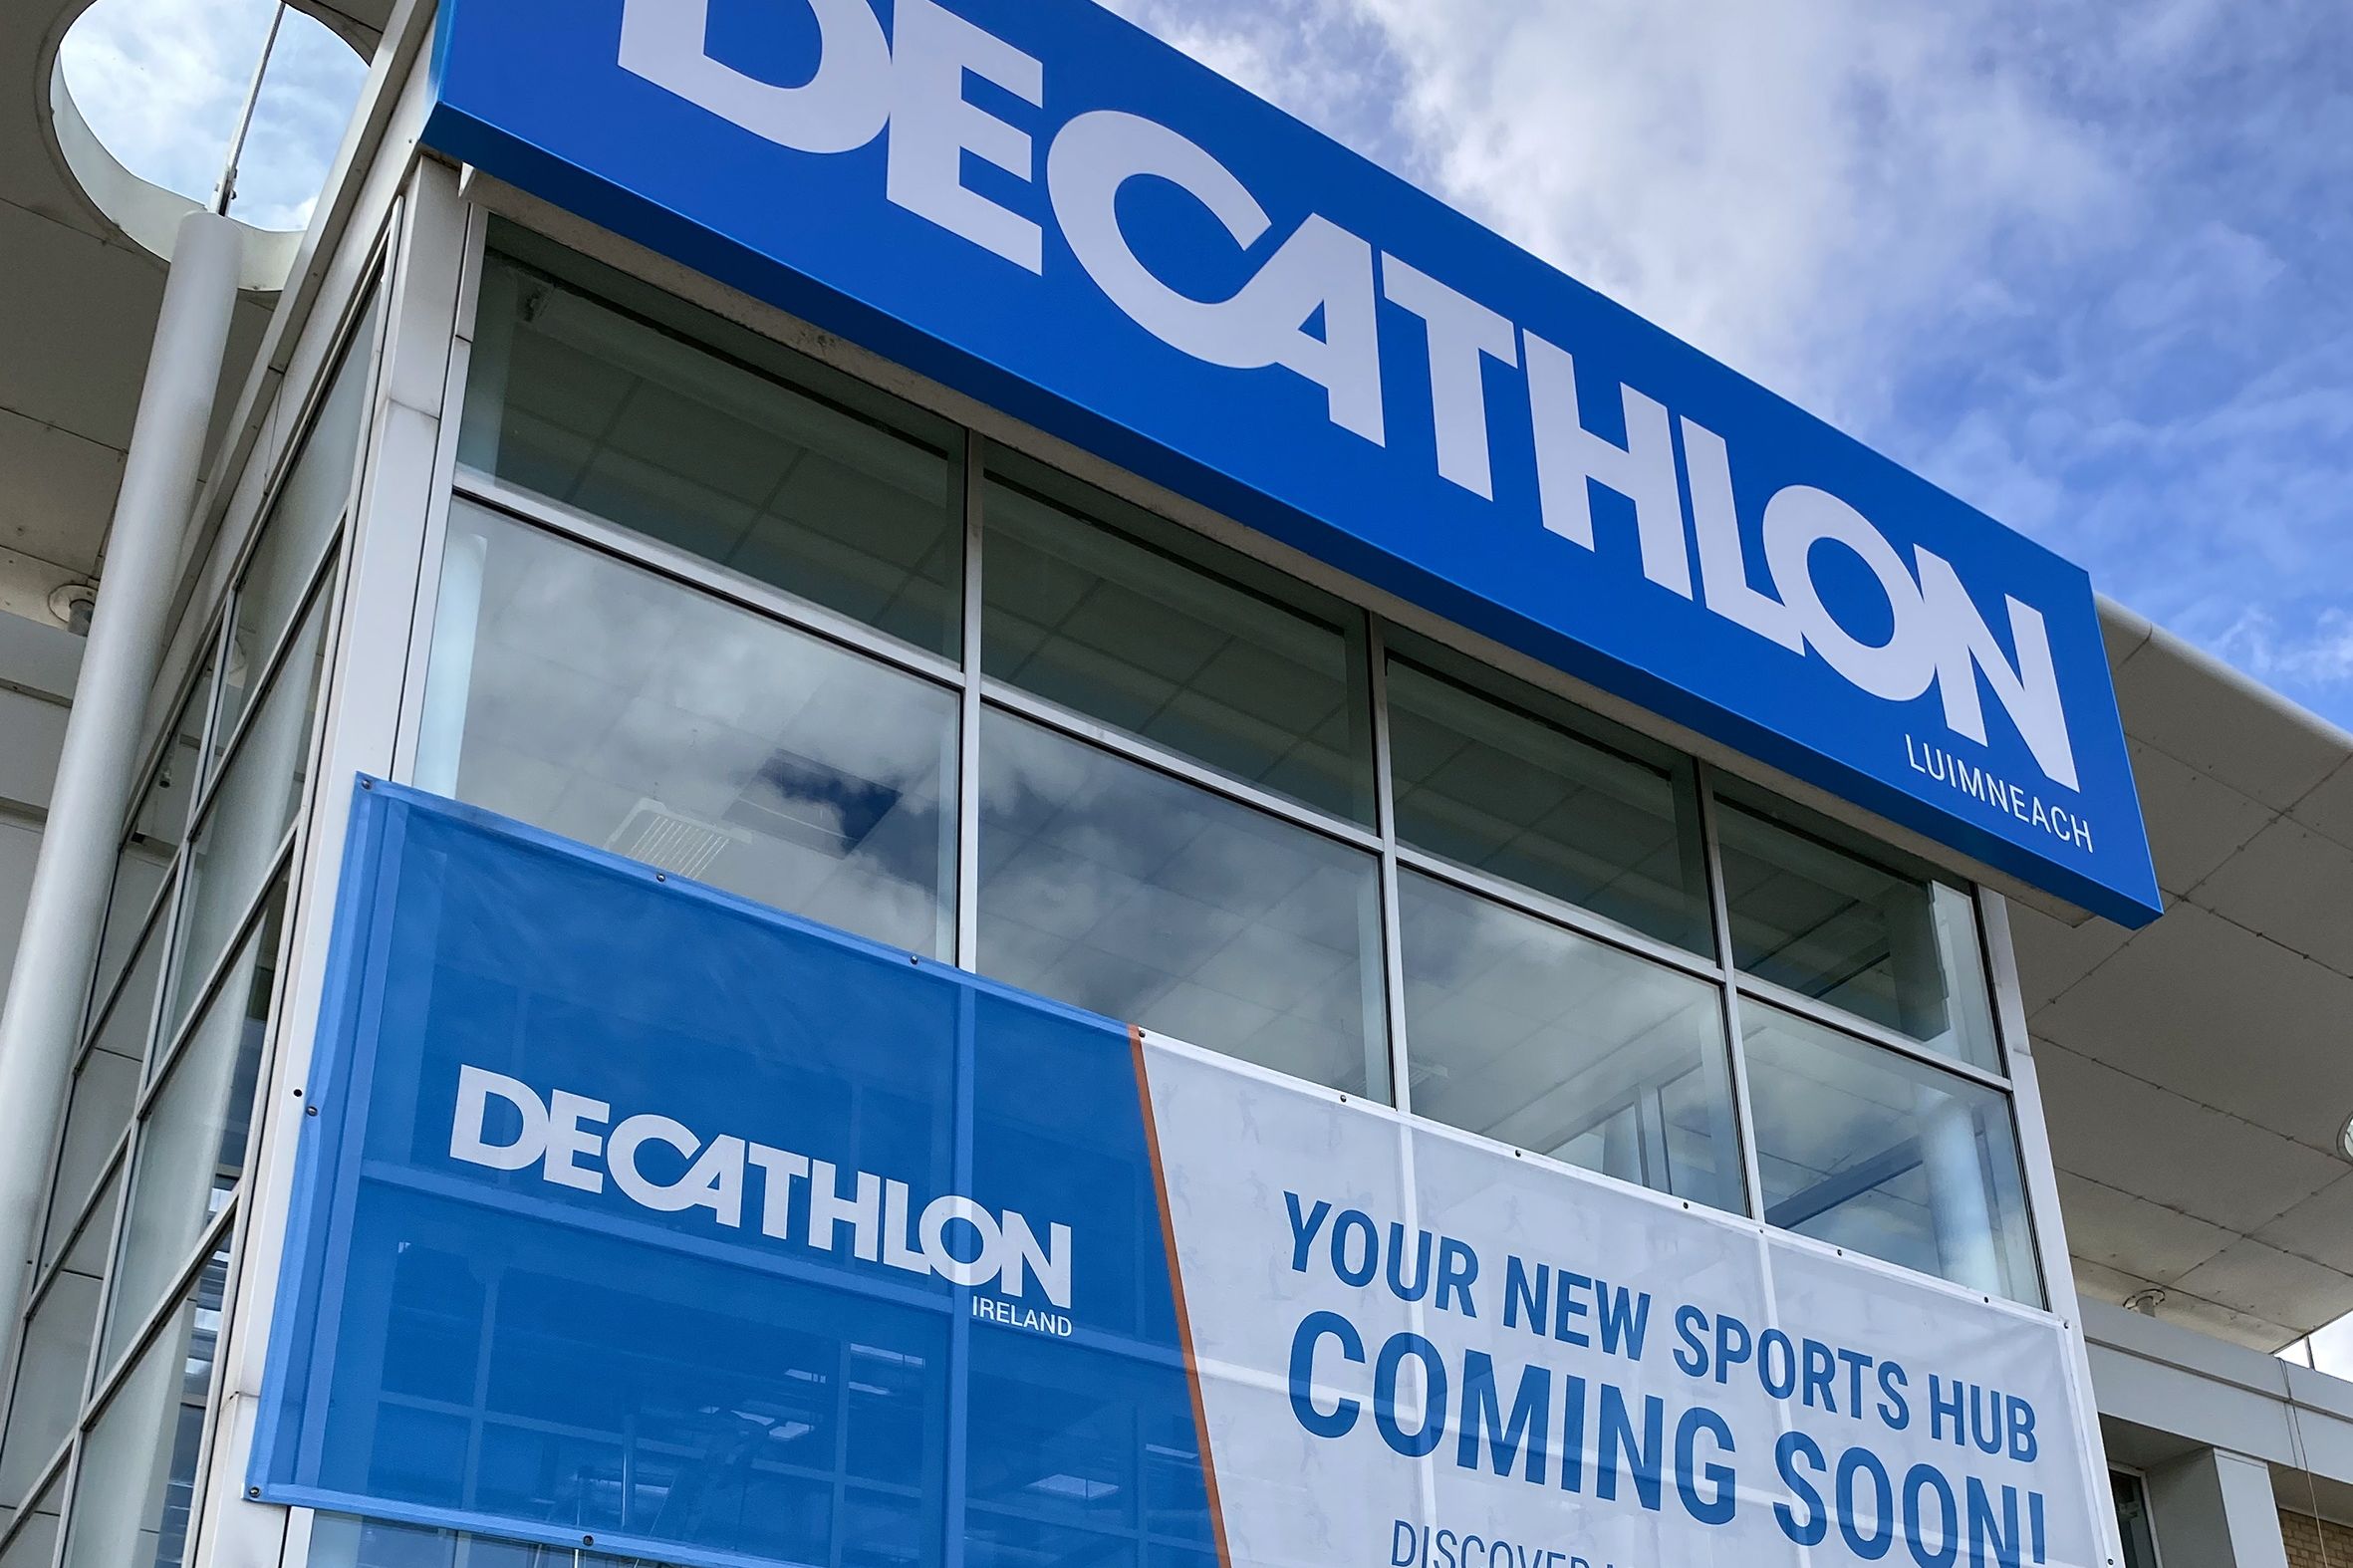 The new Decathlon warehouse in Poland 